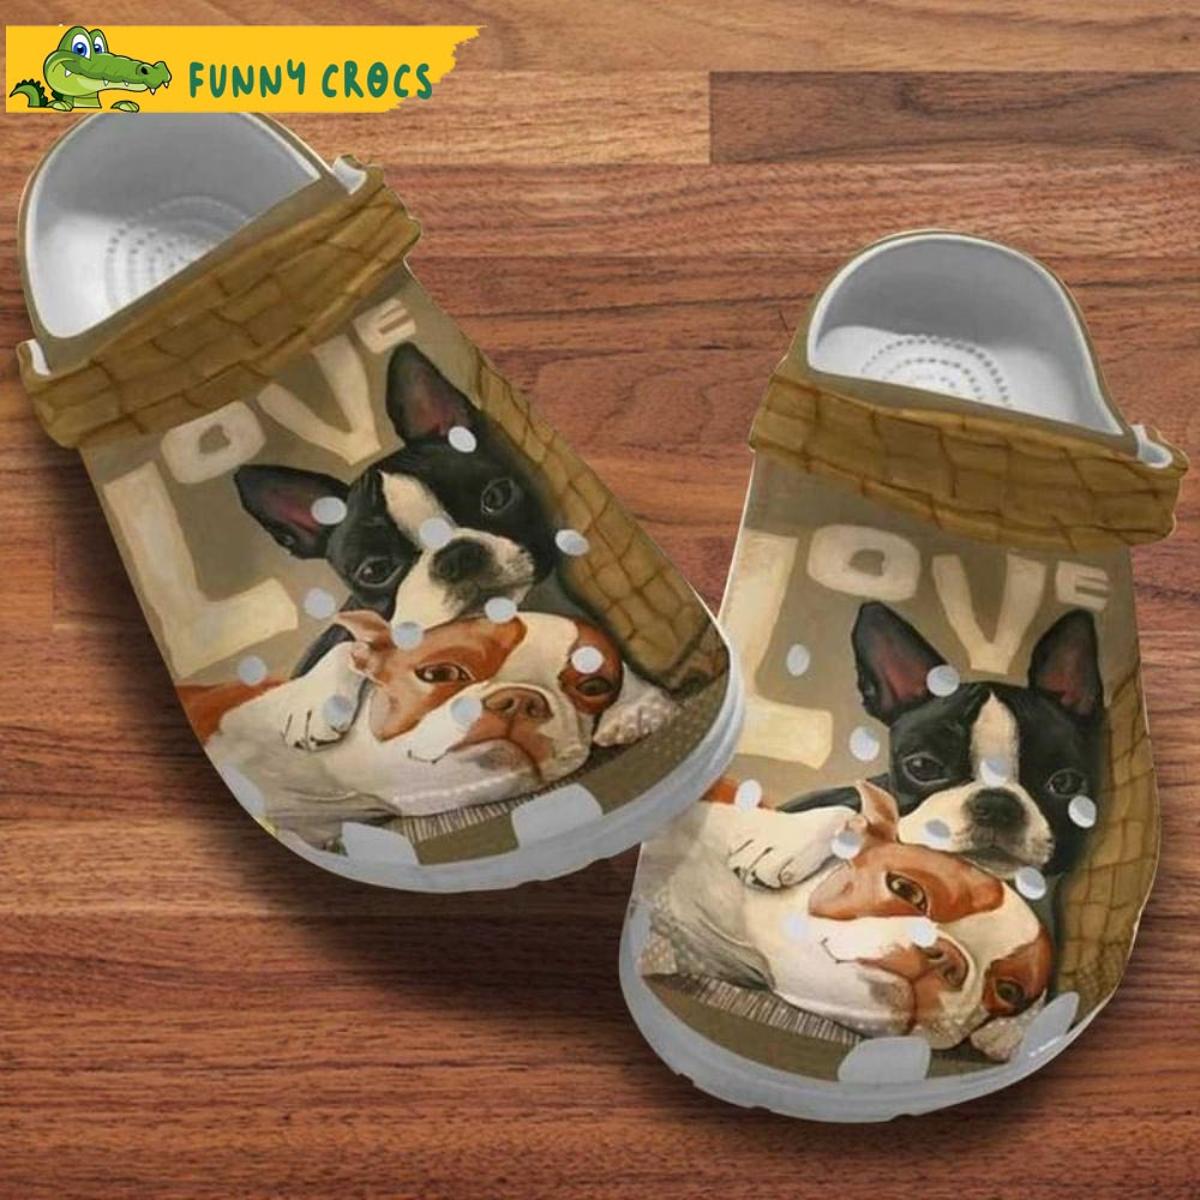 Love Boston Terrier Dogs Couple Crocs Clog Shoes